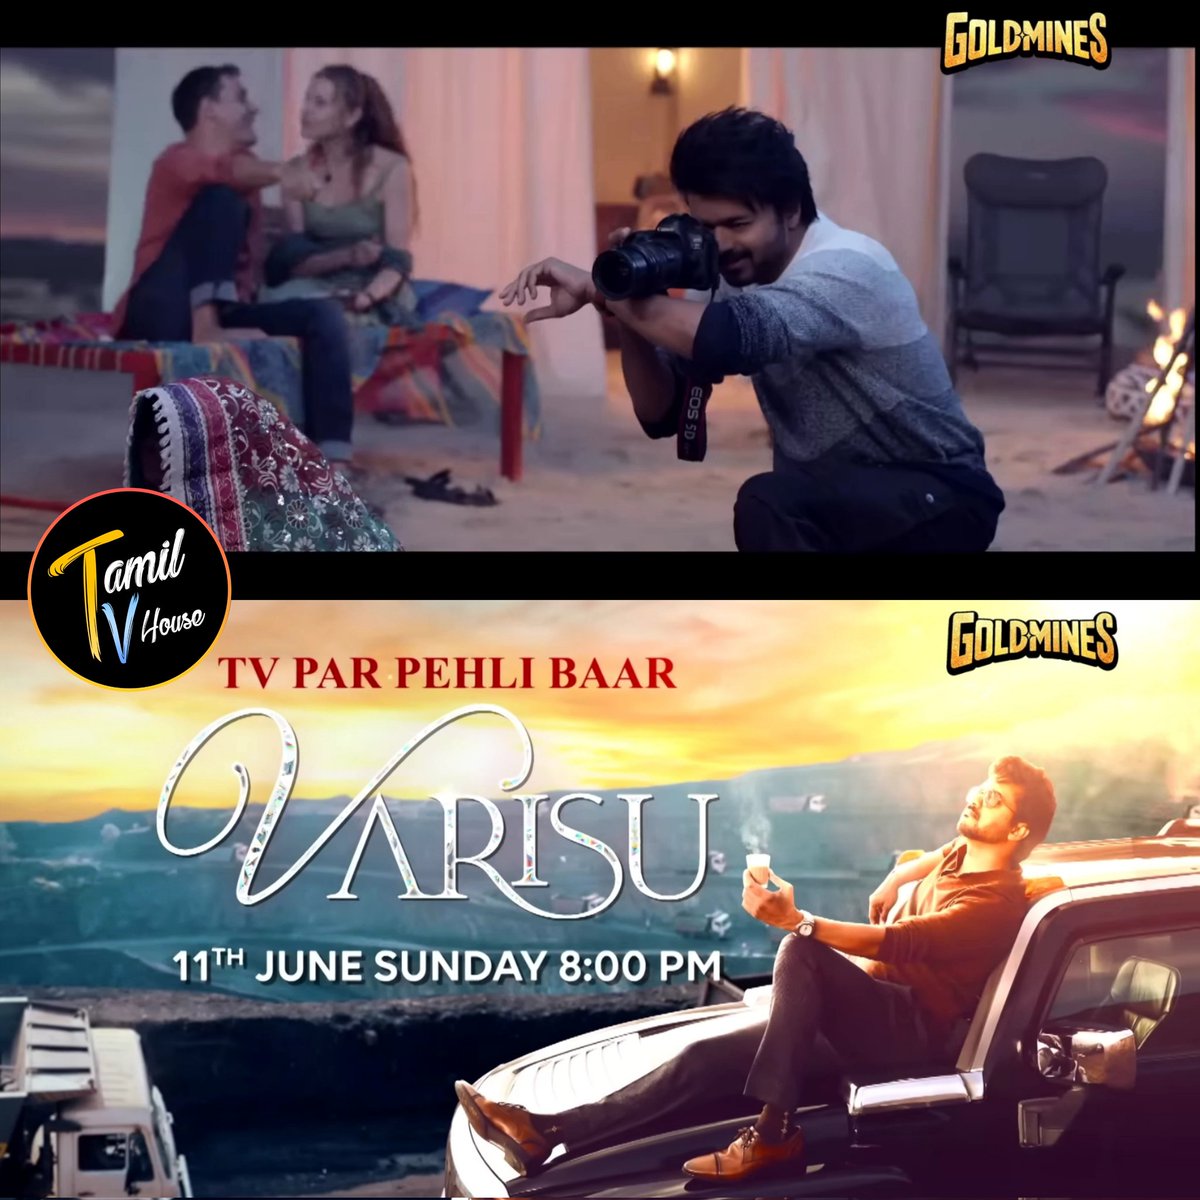 #Varisu (Hindi)
World Television Premiere
11th June, Sunday @ 8pm On #Goldmines

#SAISANGO #TAMILTVHouse
#ThalapathyVijay #RashmikaMandanna